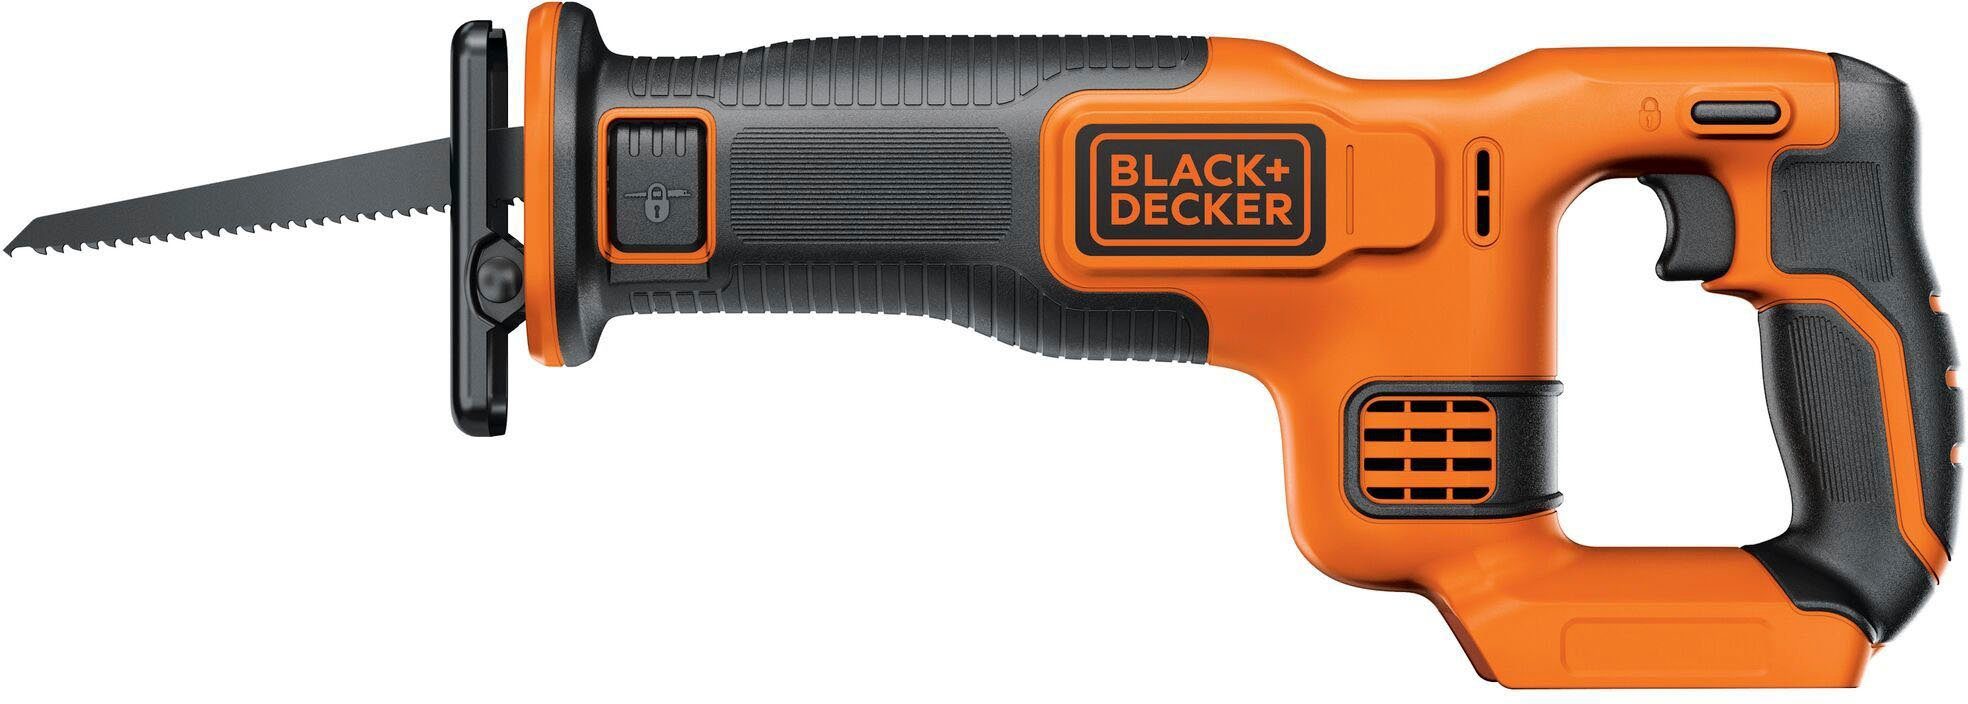 Black + Decker Akku 18 und BDCR18N-XJ, V, Ladegerät ohne Akku-Säbelsäge